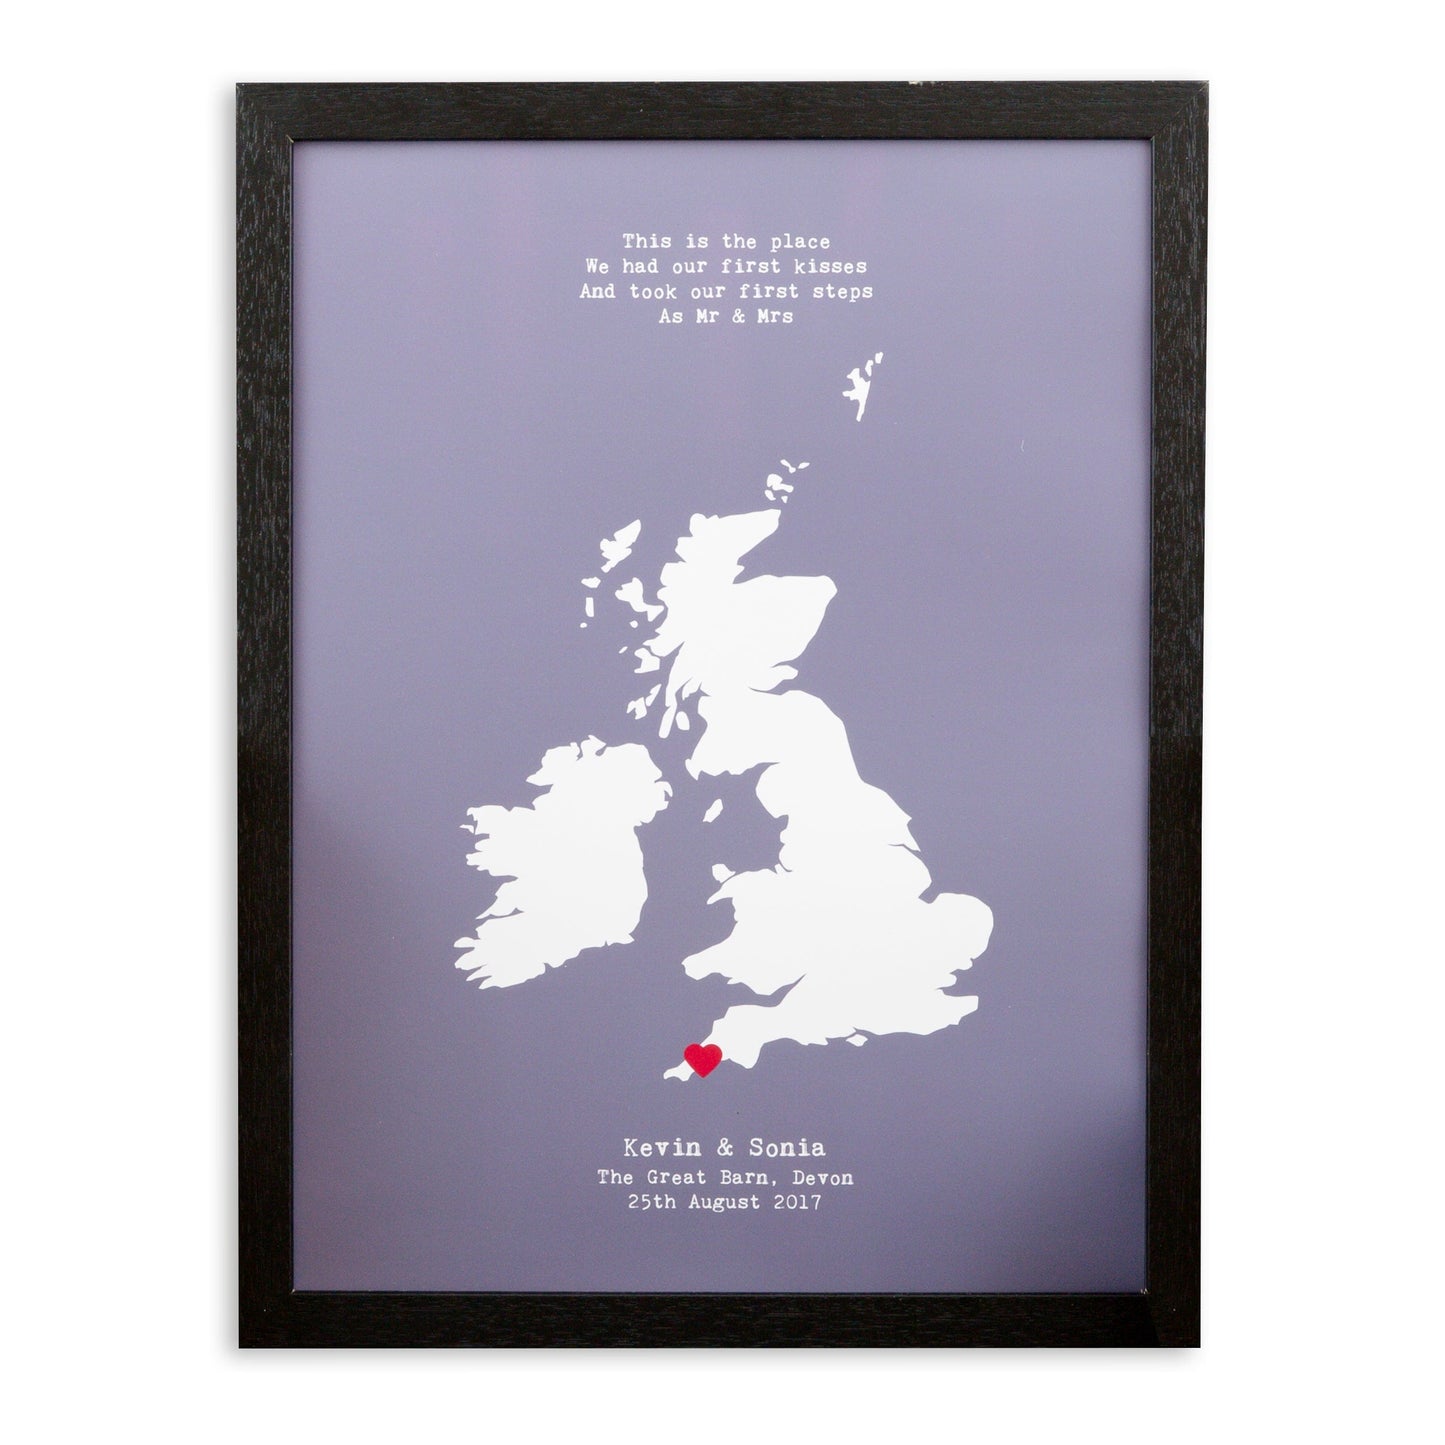 Venue Of Wedding Print Gift For Anniversary - Personalised Location Heart Print - Mr & Mr, Mrs & Mrs, Mr & Mrs